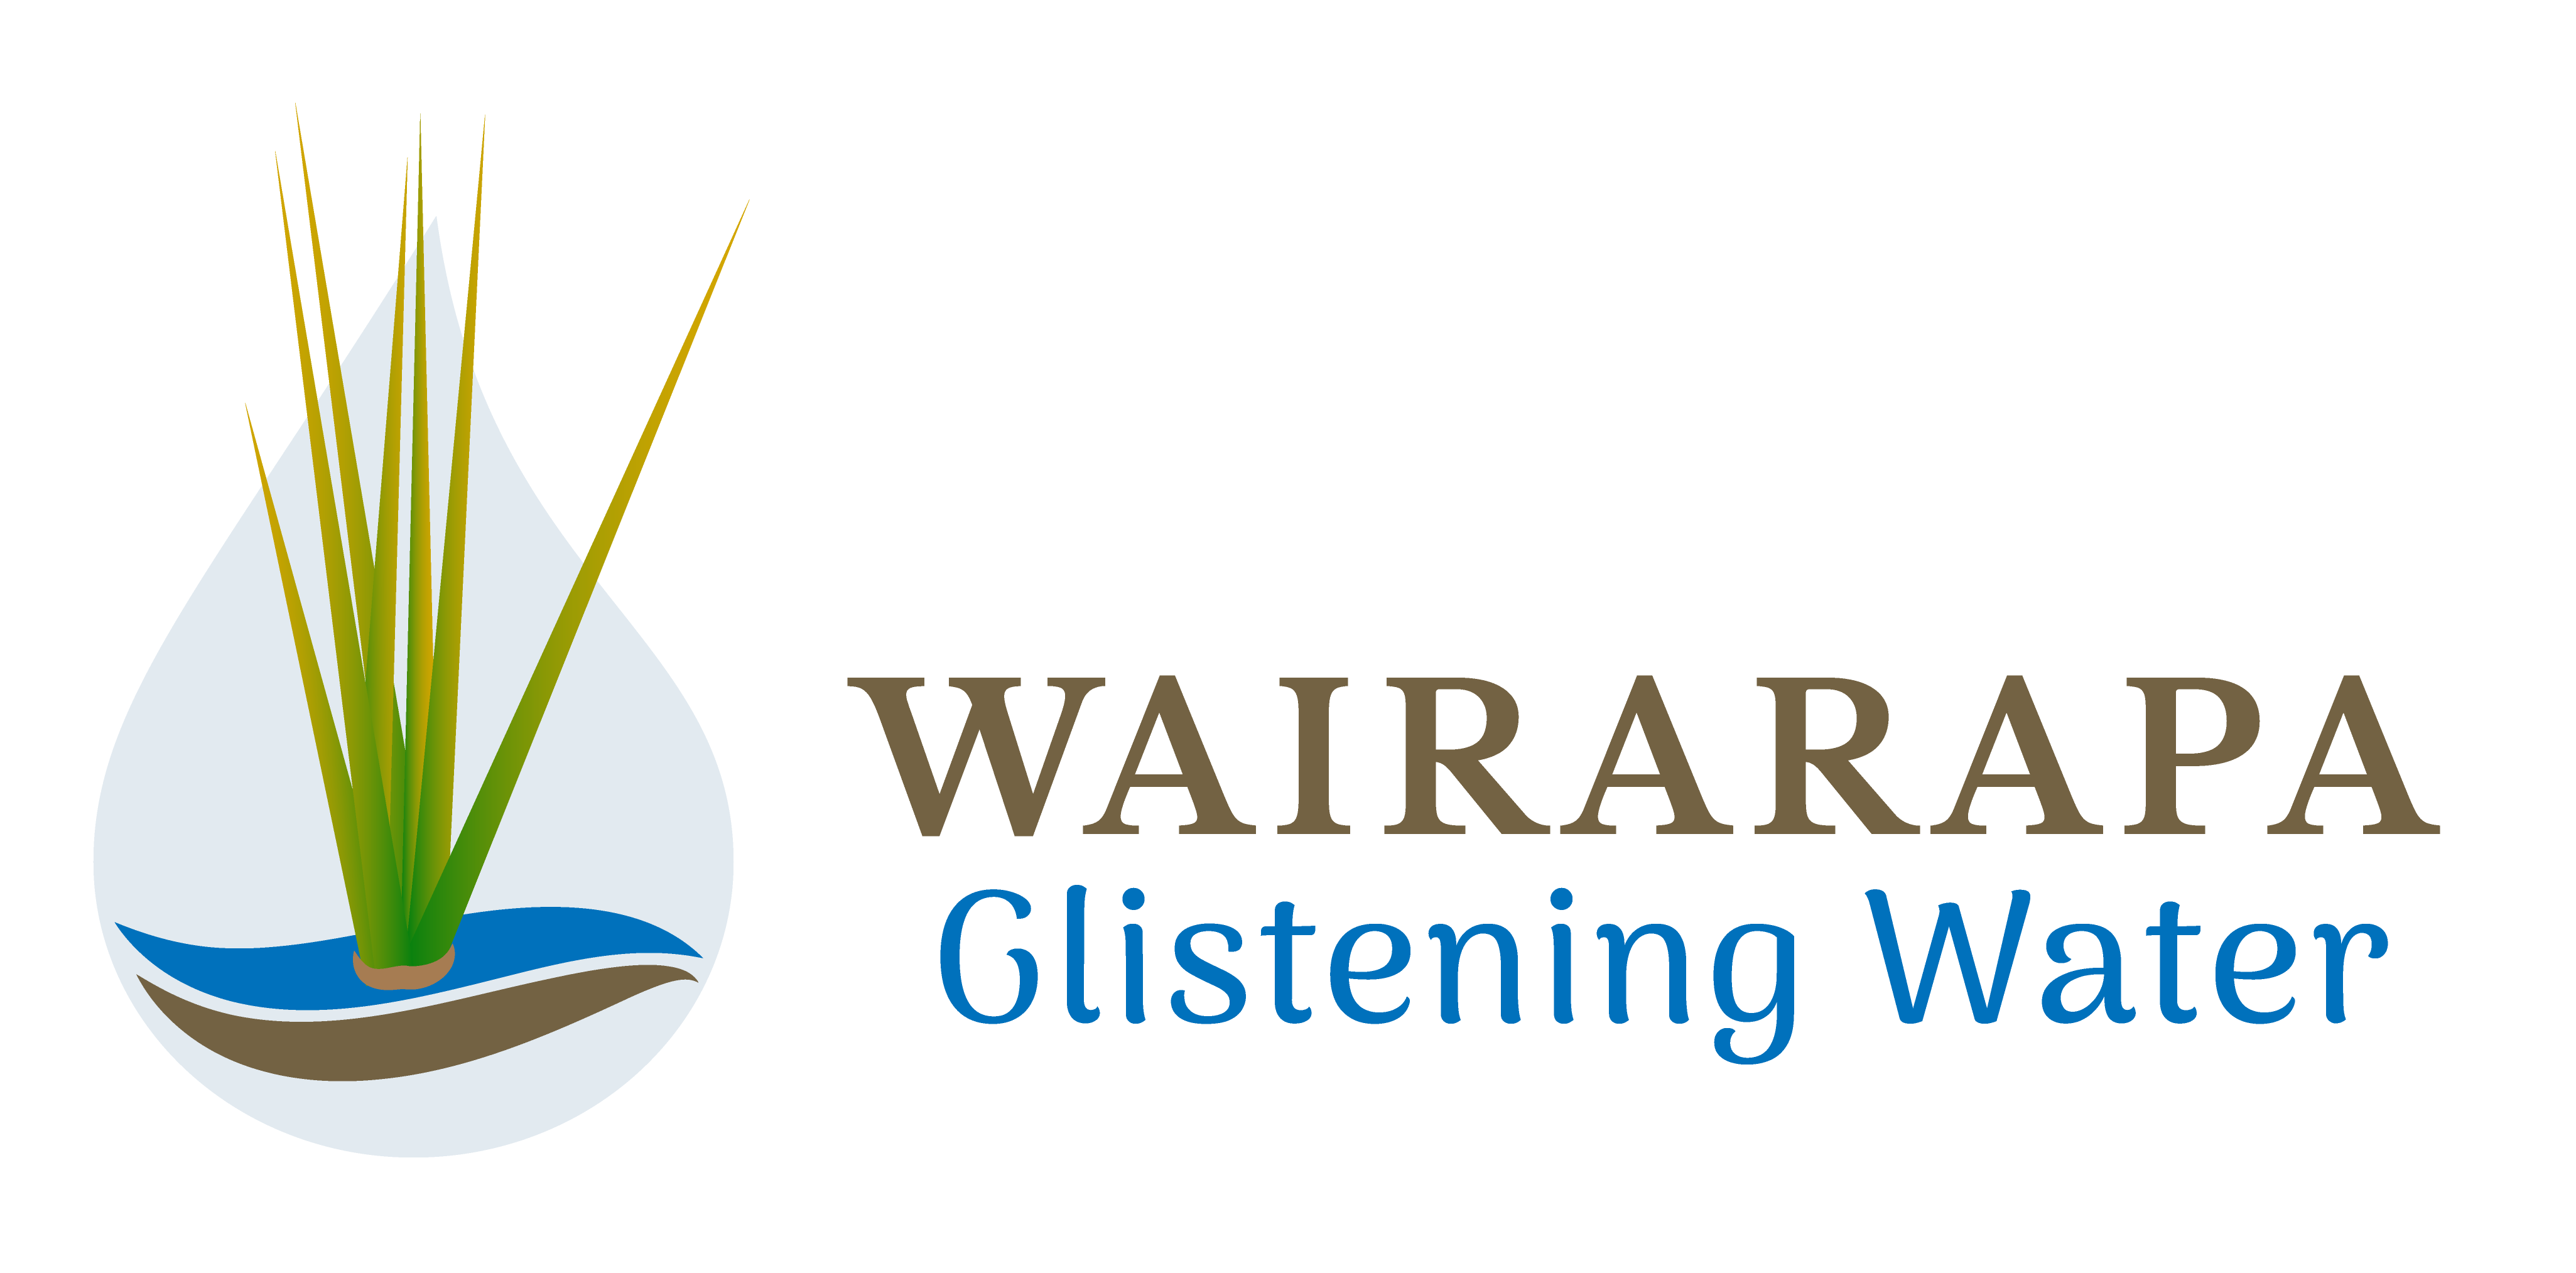 Wairarapa Glistening Water